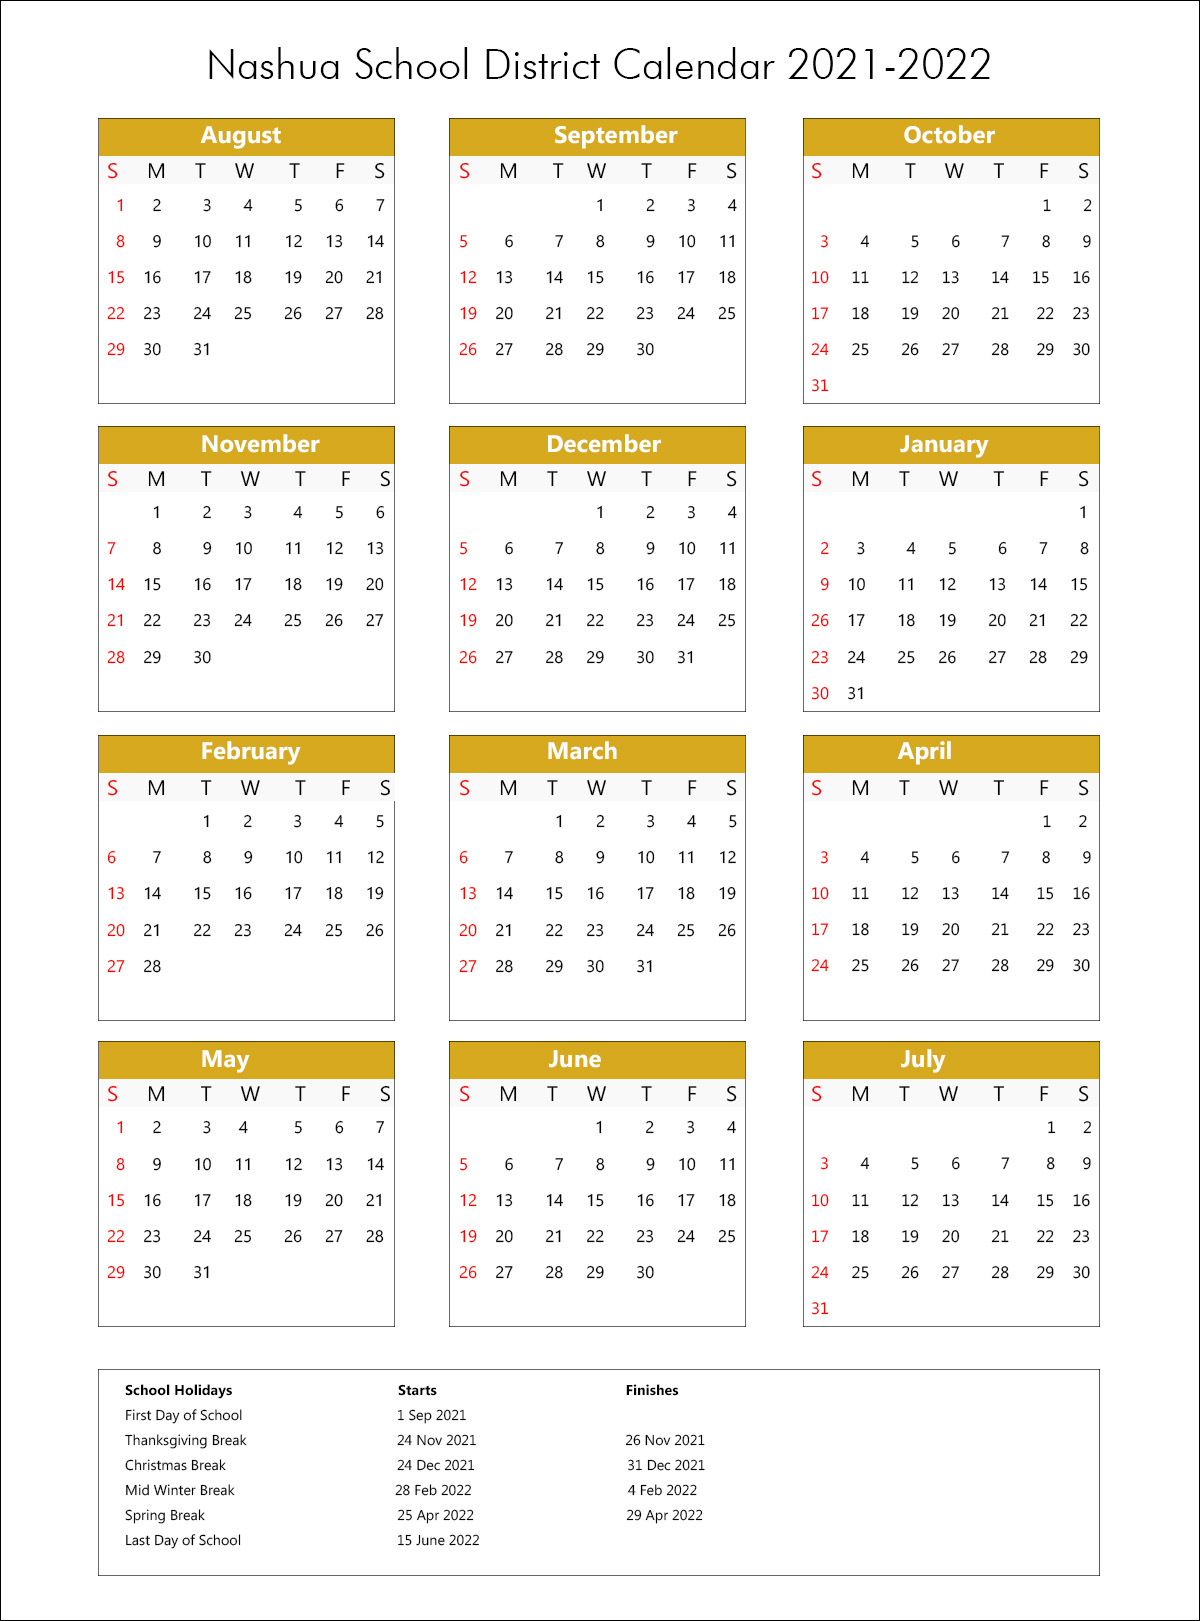 Nashua School District Calendar 2021